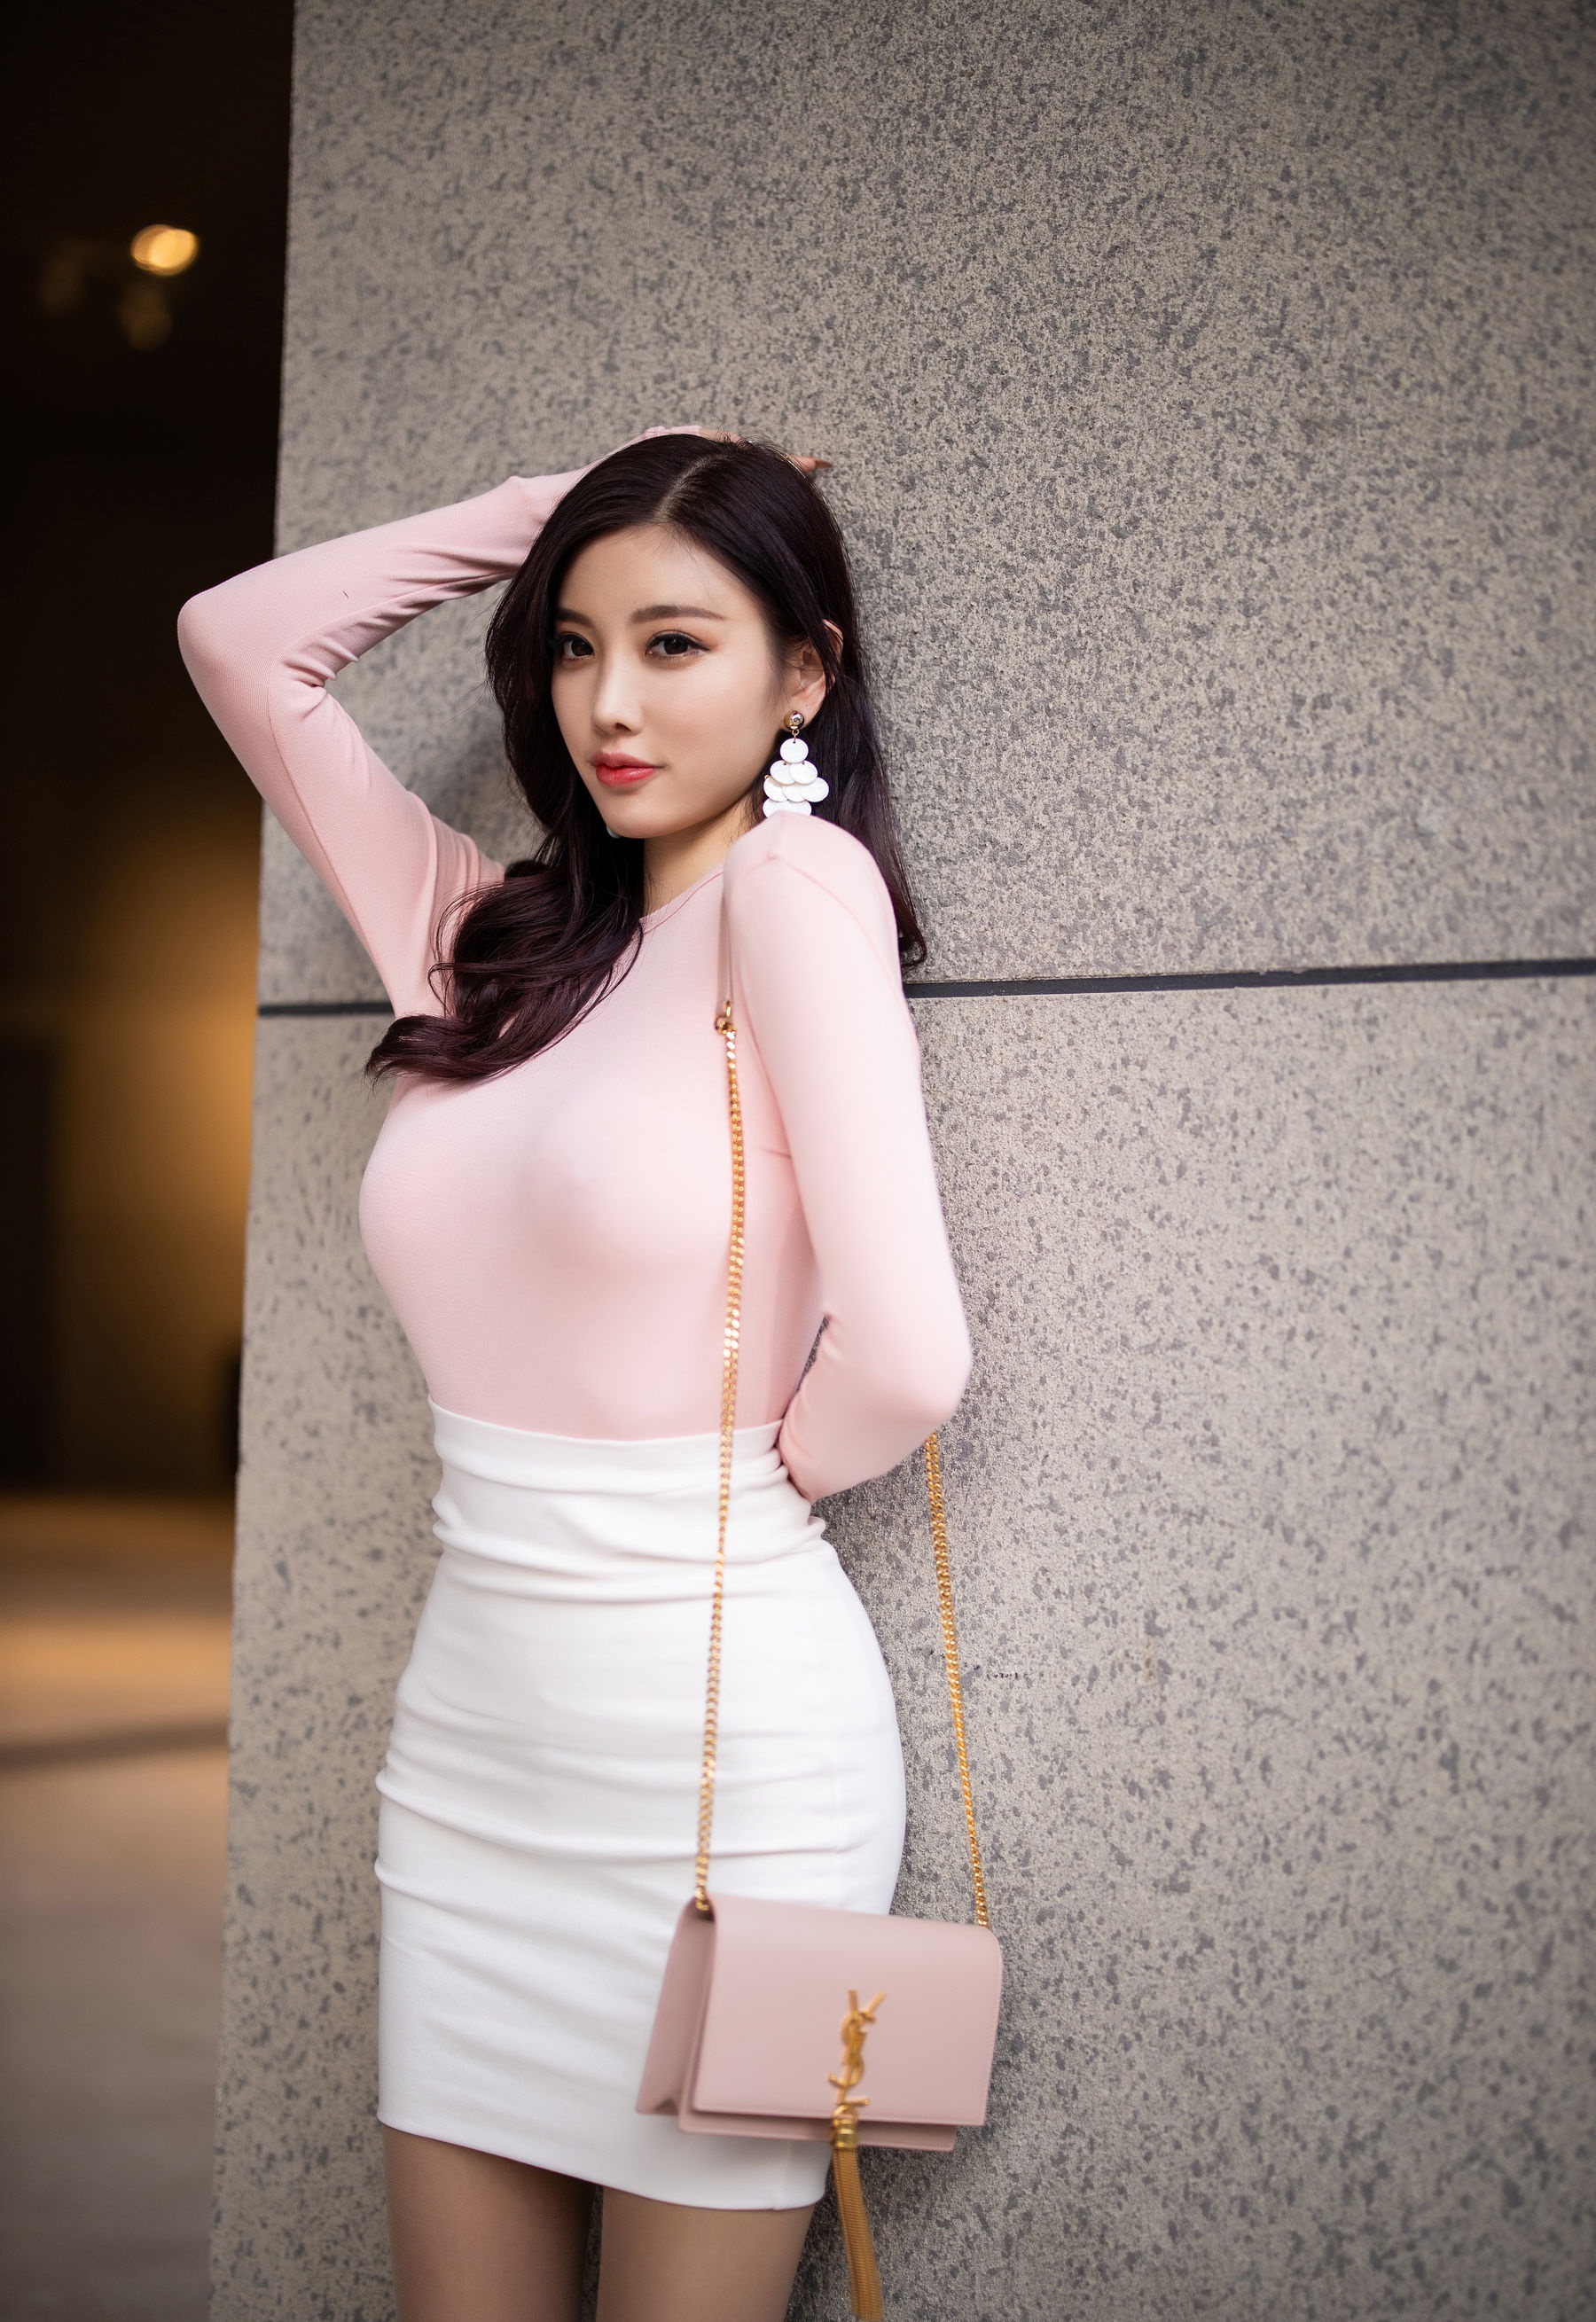 Asian Model Women Women Outdoors Long Hair Dark Hair Leaning Wall White Skirt Pink Shirt Earrings Ha 1800x2619